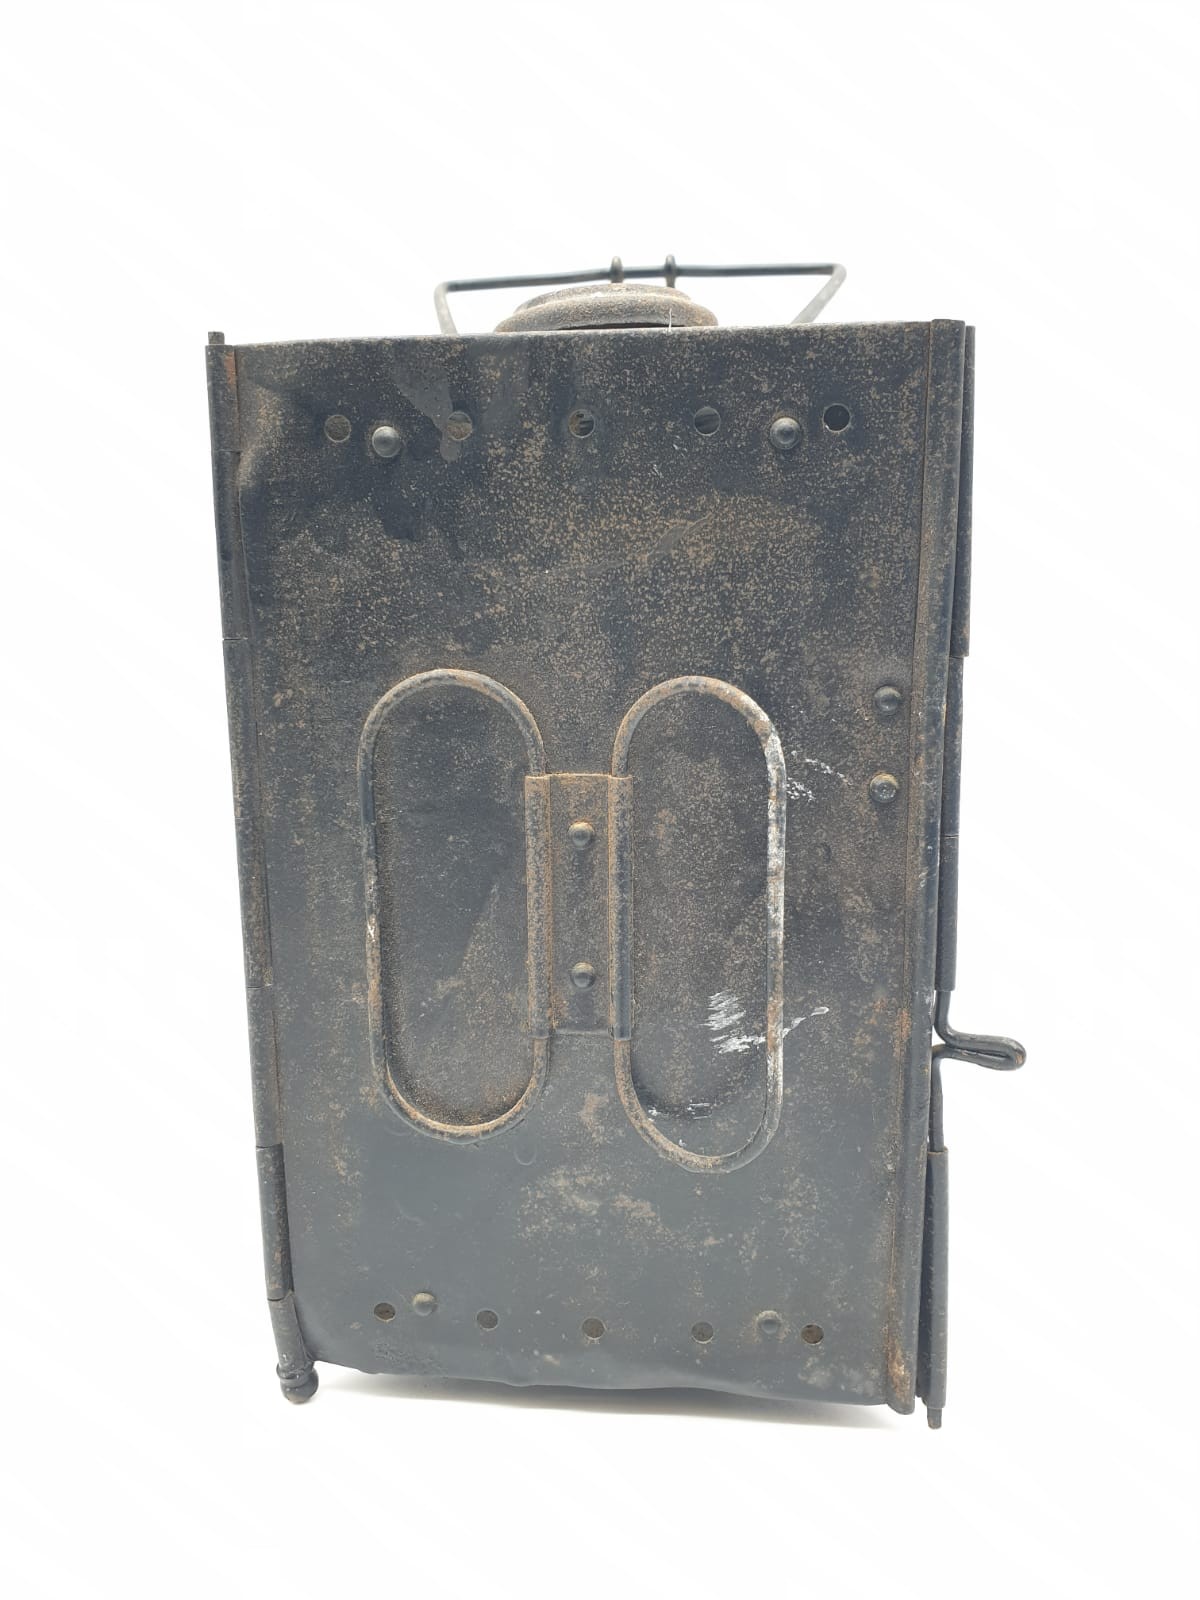 WW1 French Folding Bunker Lantern. (no glass) - Image 4 of 6